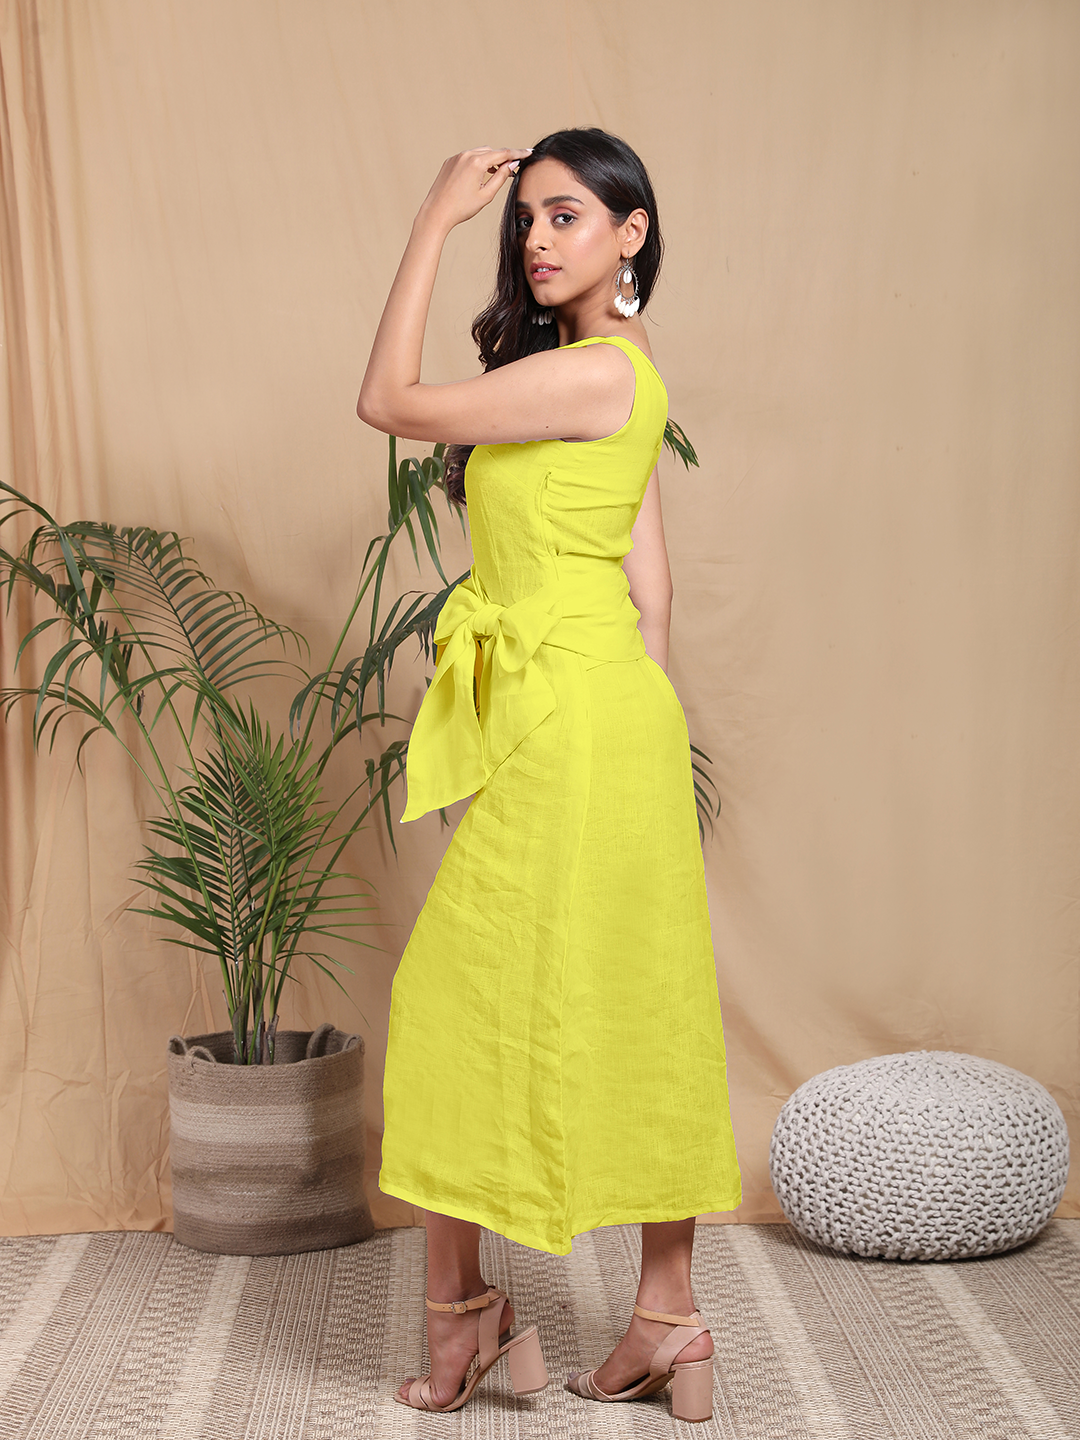 Yellow Printed Midi Dress